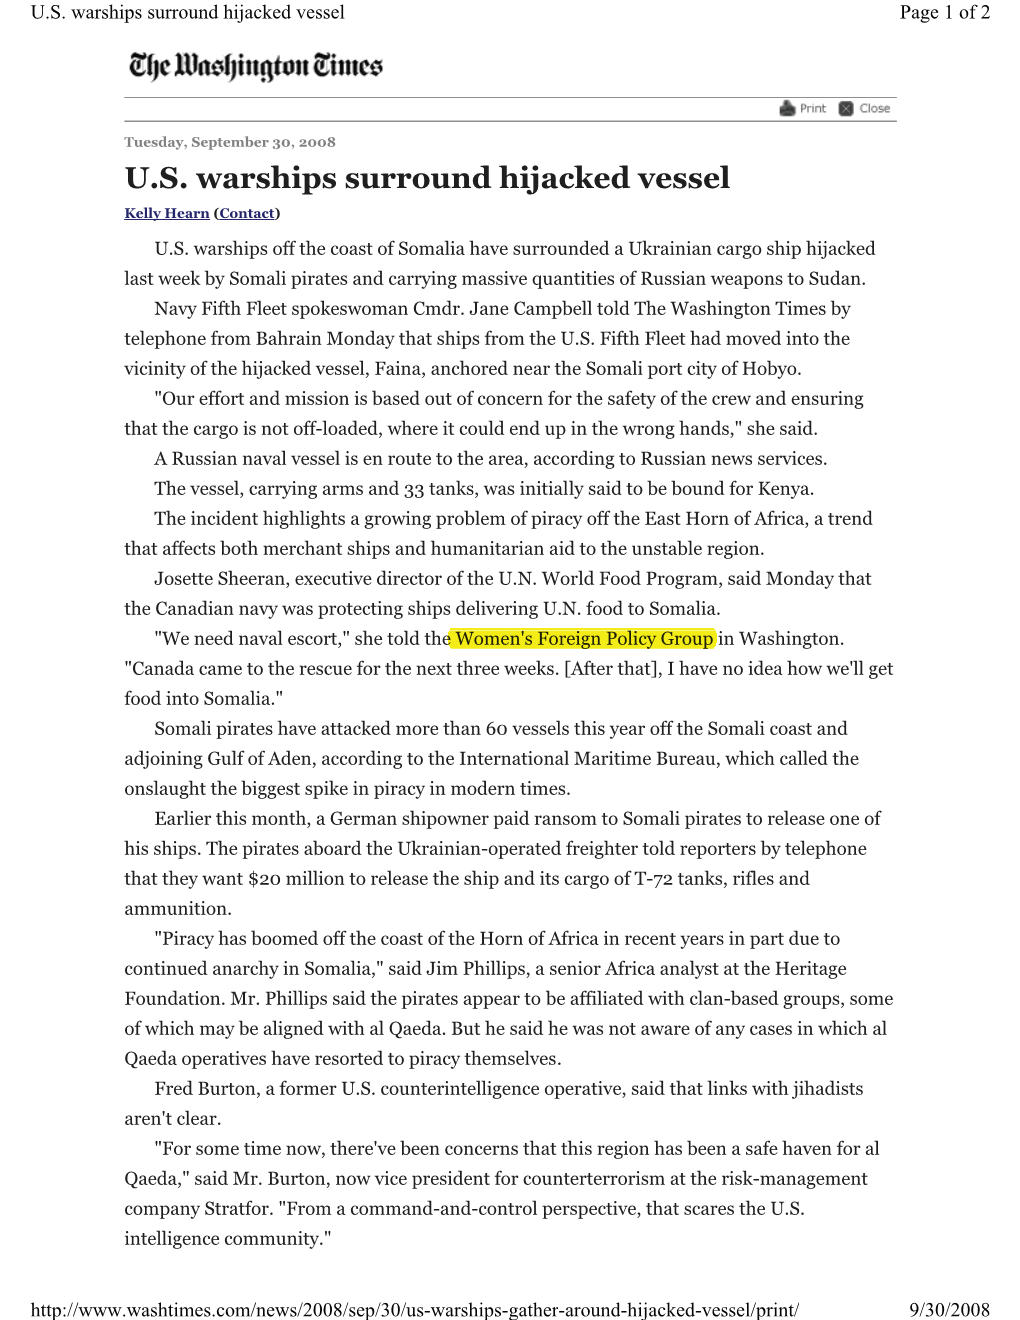 U.S. Warships Surround Hijacked Vessel Page 1 of 2